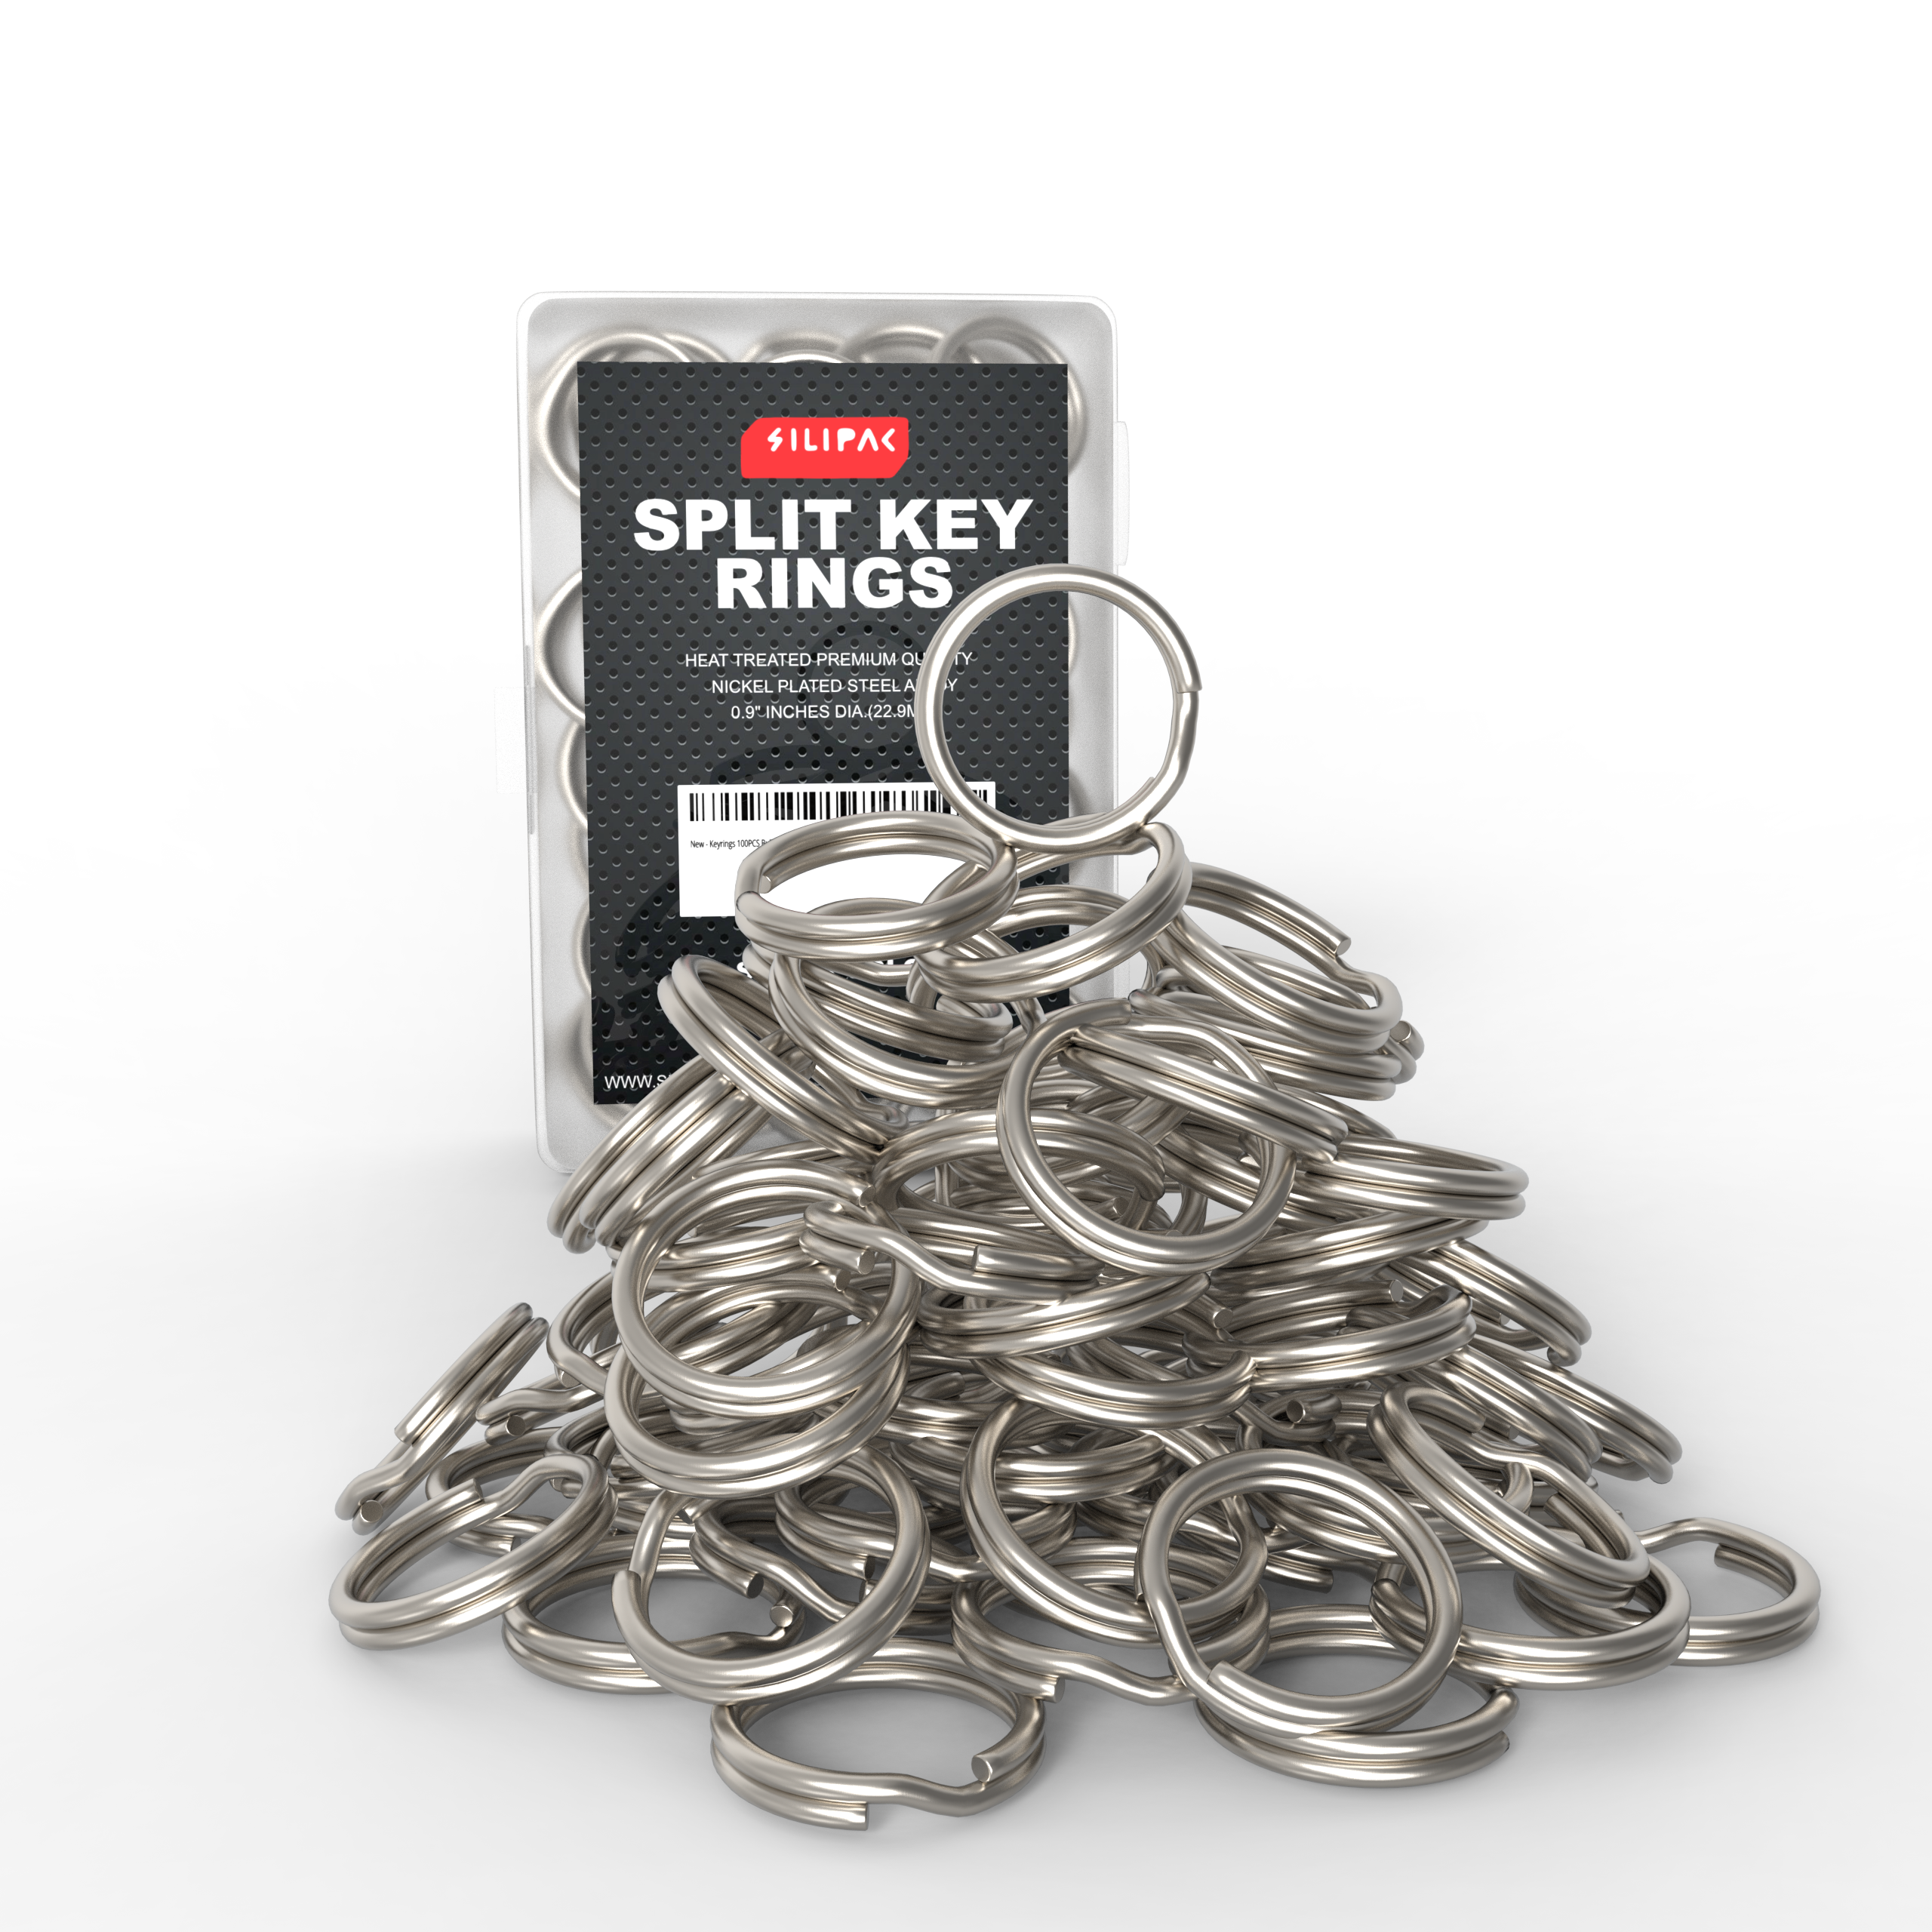 10 Pieces Stainless Steel Key Rings Heavy Duty Split Rings for